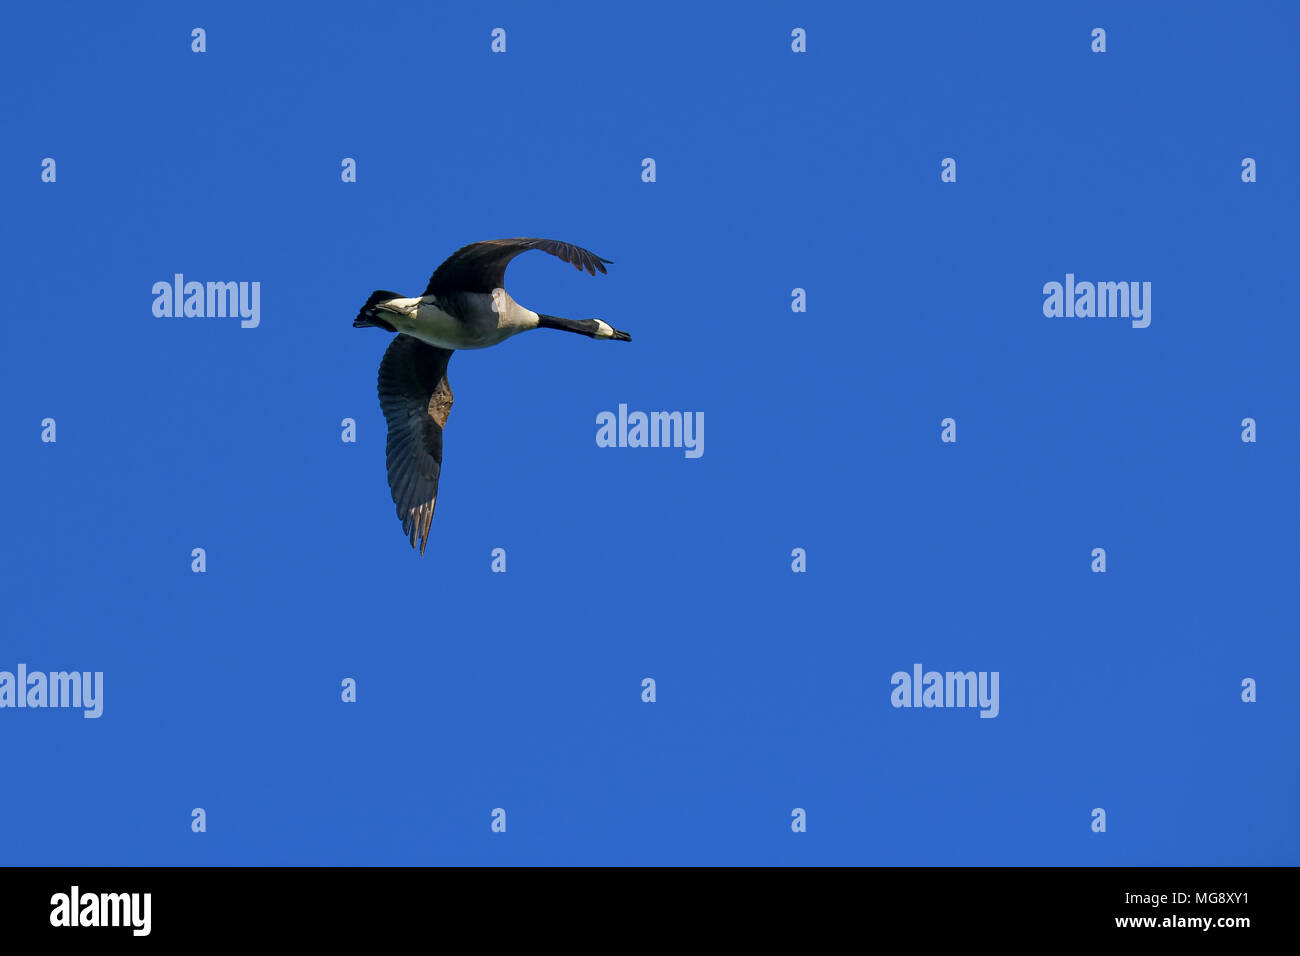 A canada goose flies overhead against a bright blue sky Stock Photo